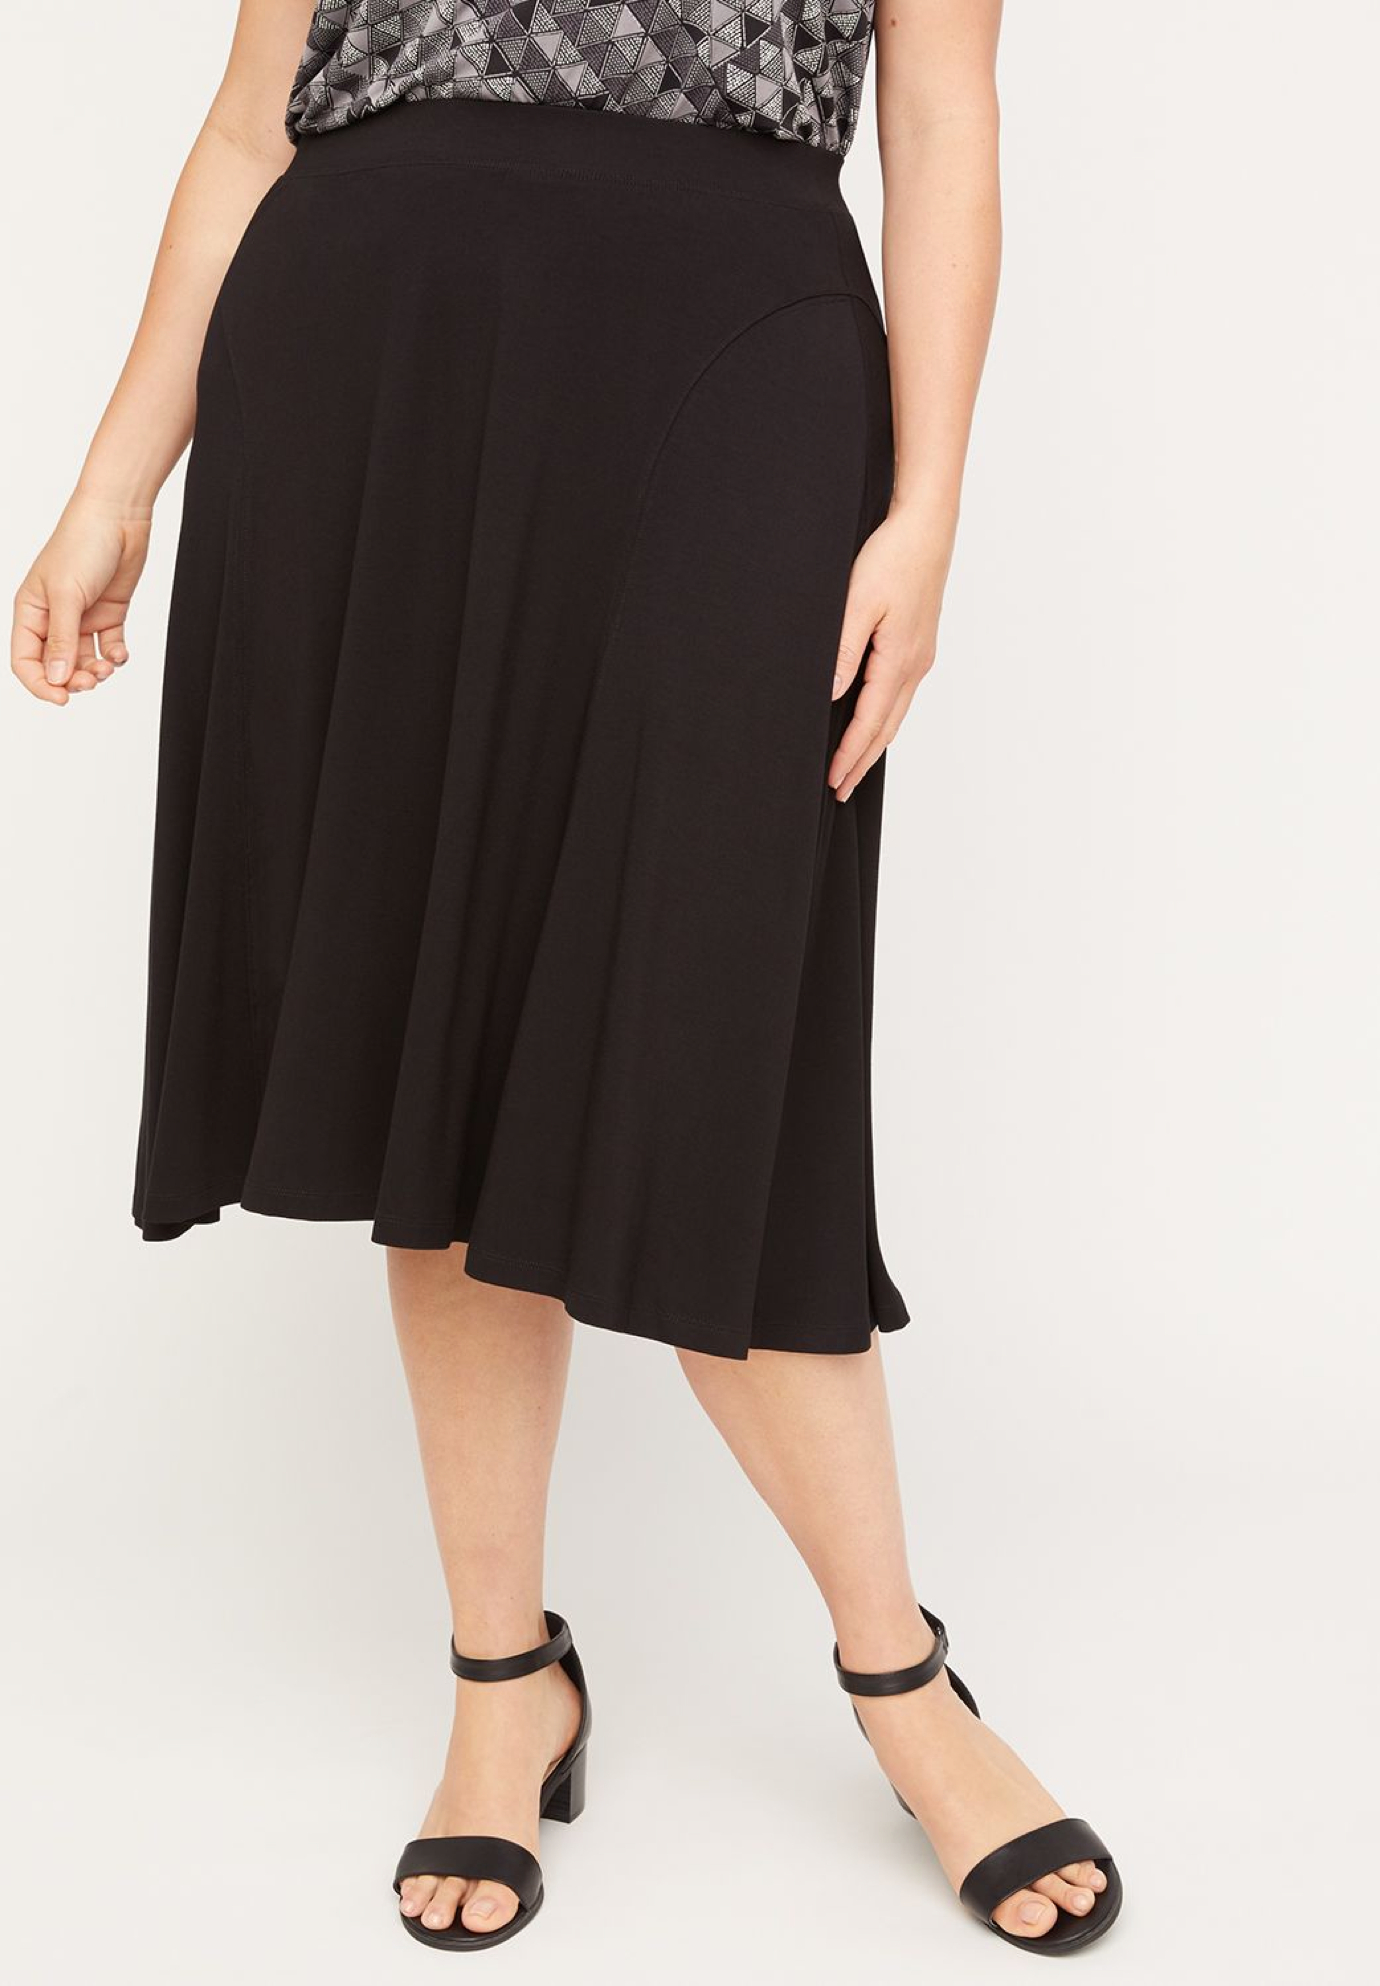 AnyWear Side-Seam Skirt | Catherines